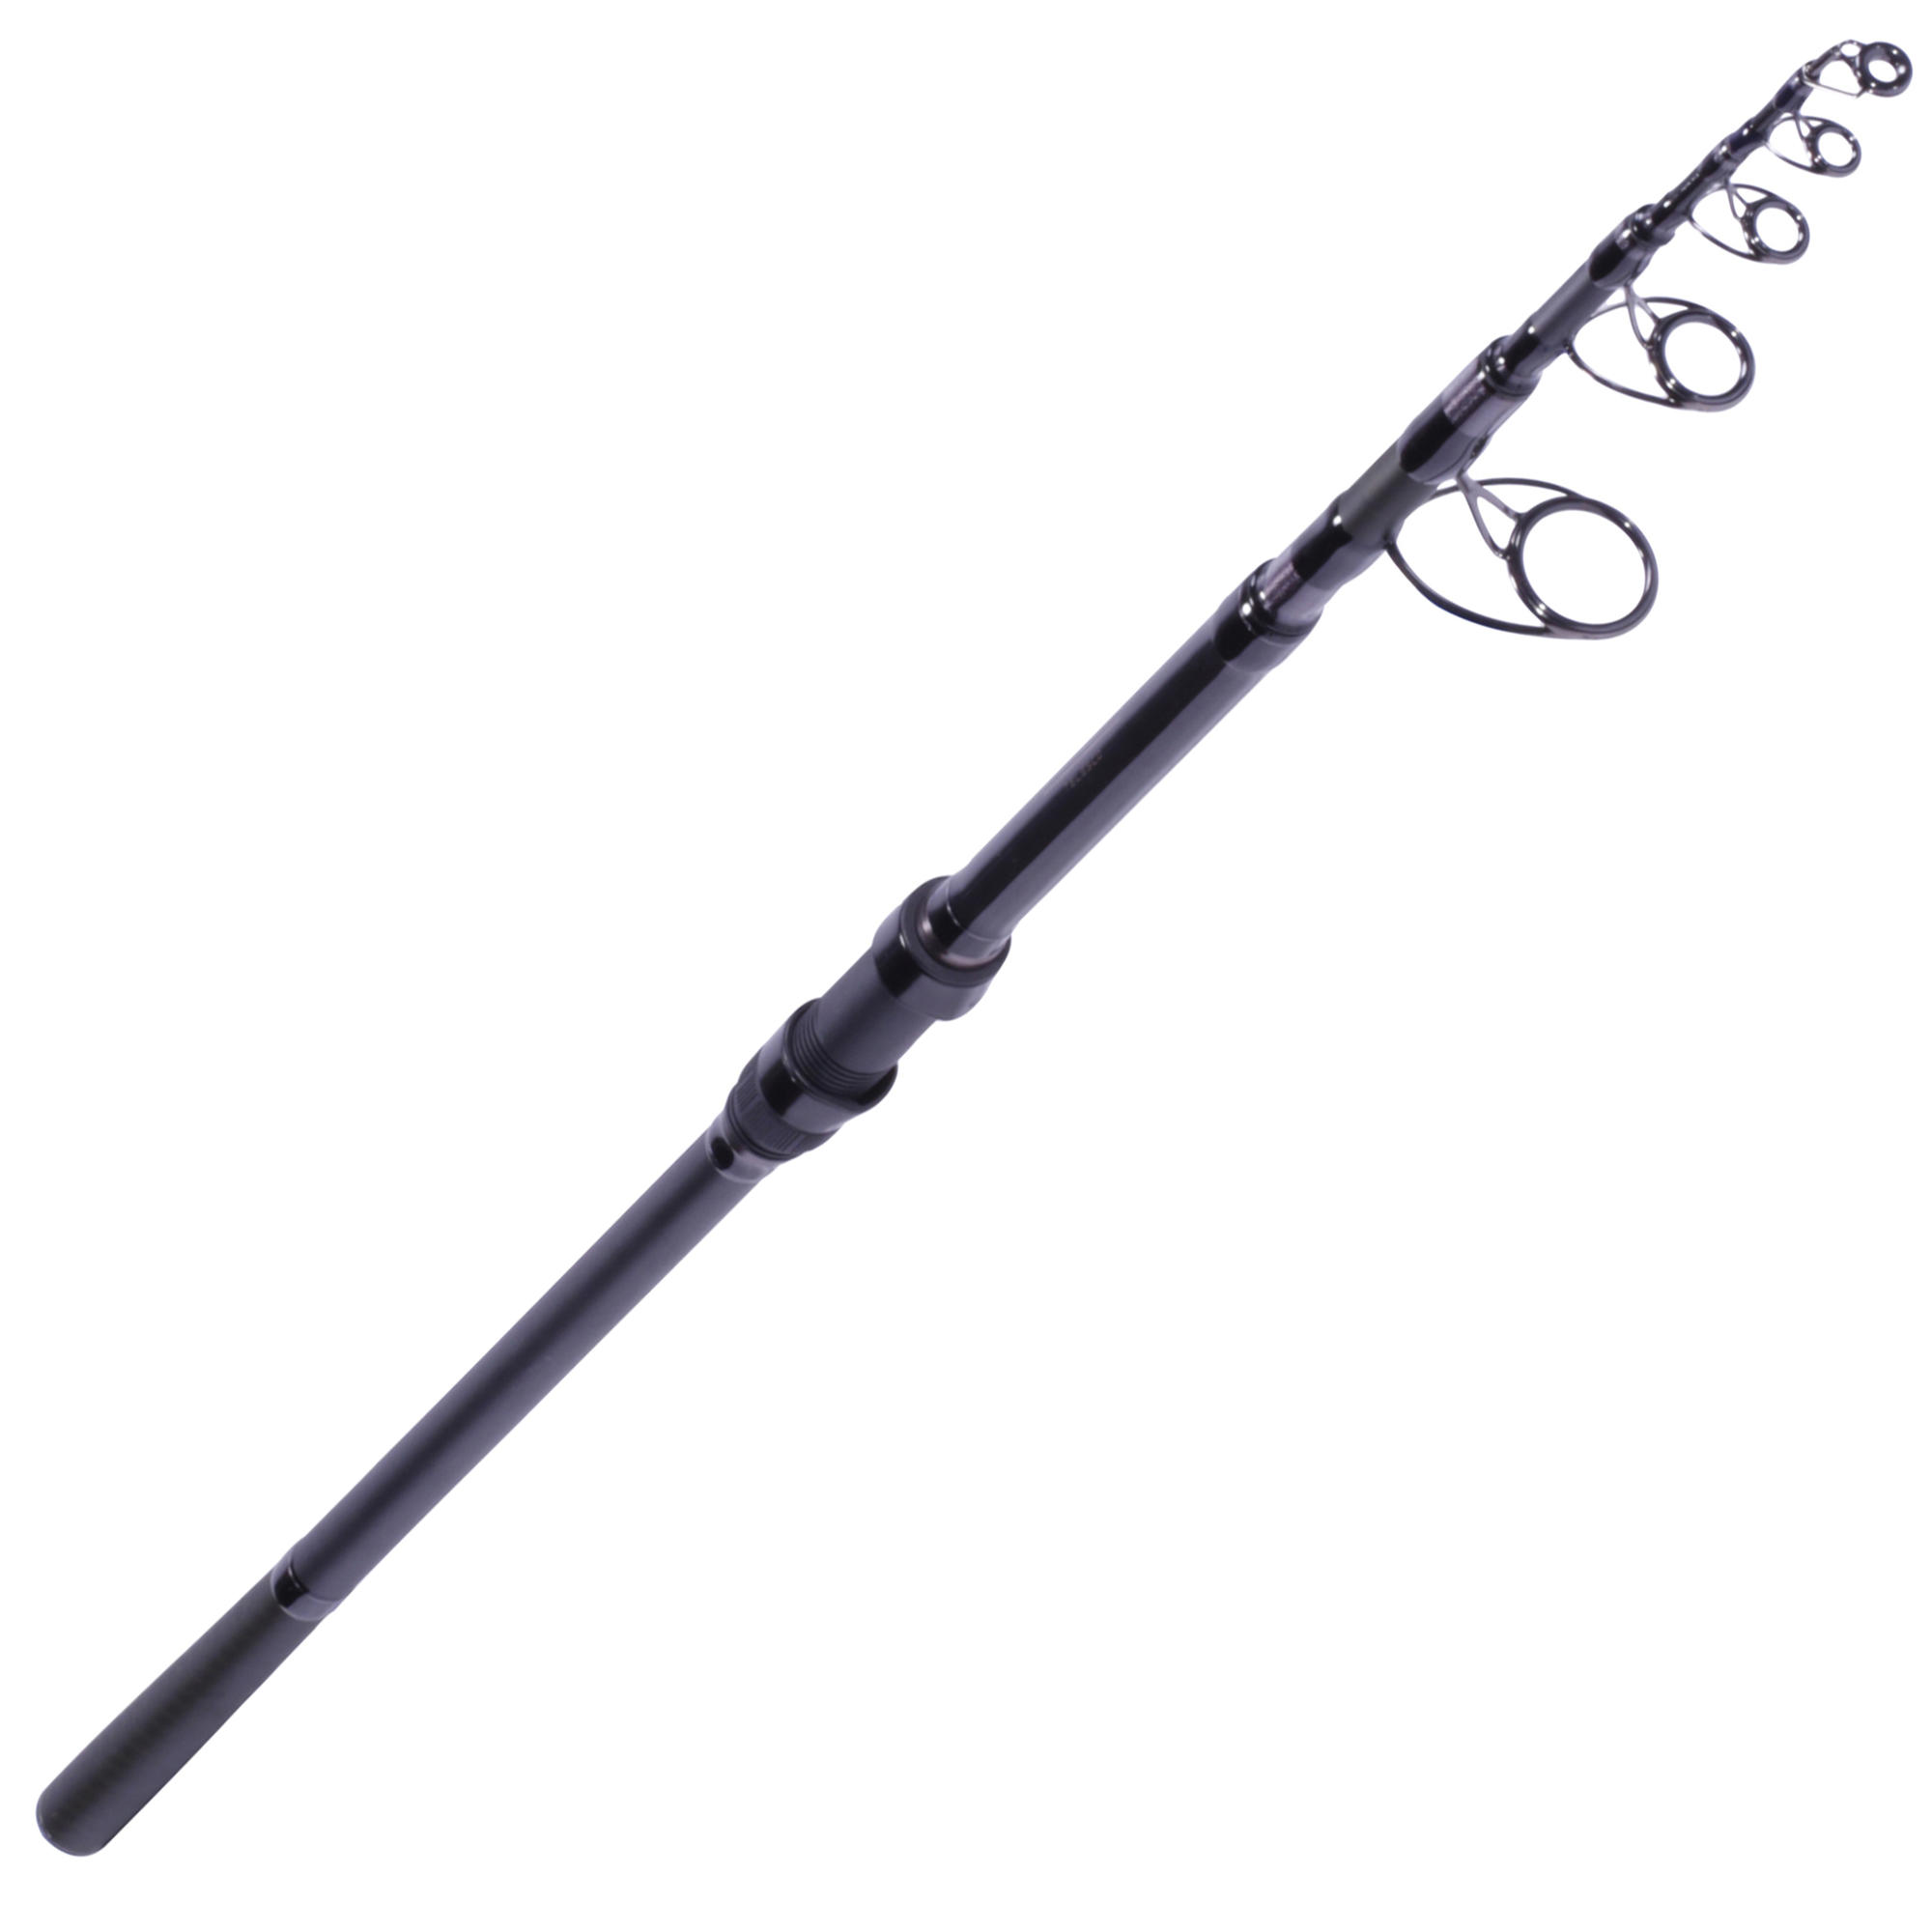 caperlan telescopic fishing rod